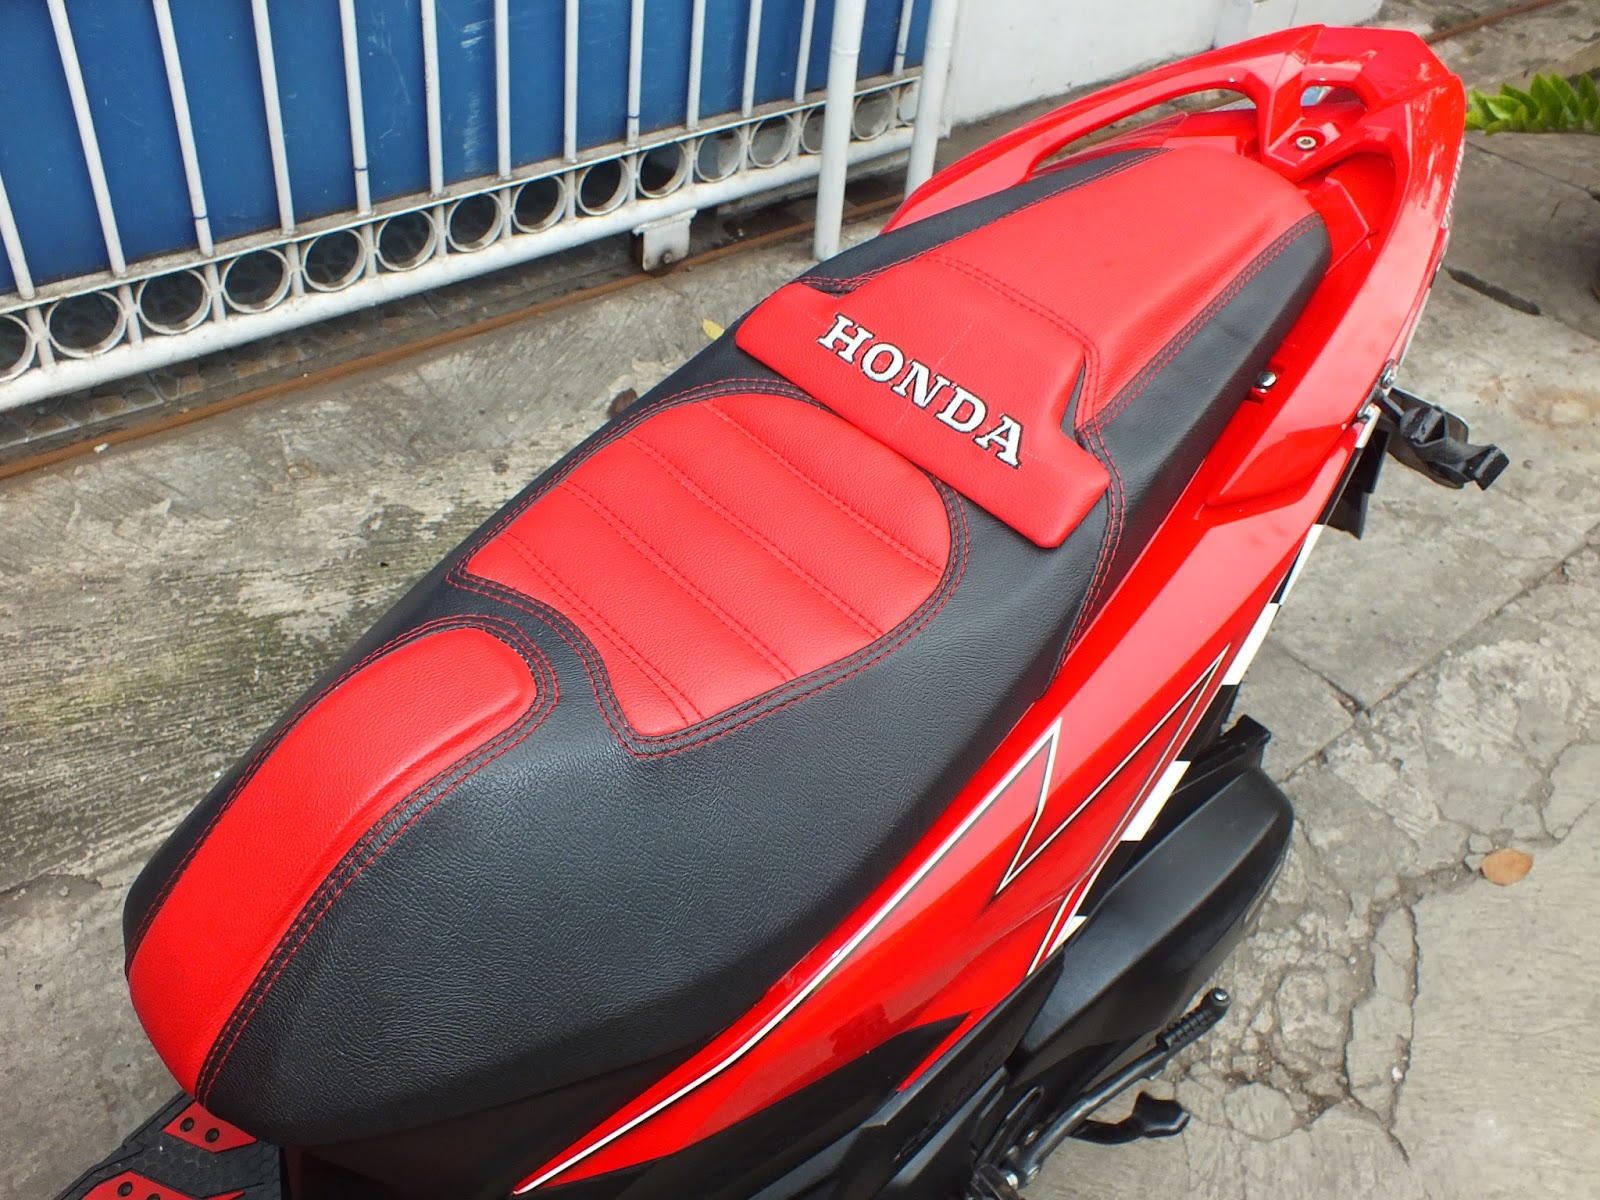 Modifikasi JOK MOTOR: JOK Honda Vario 150 Modif model 